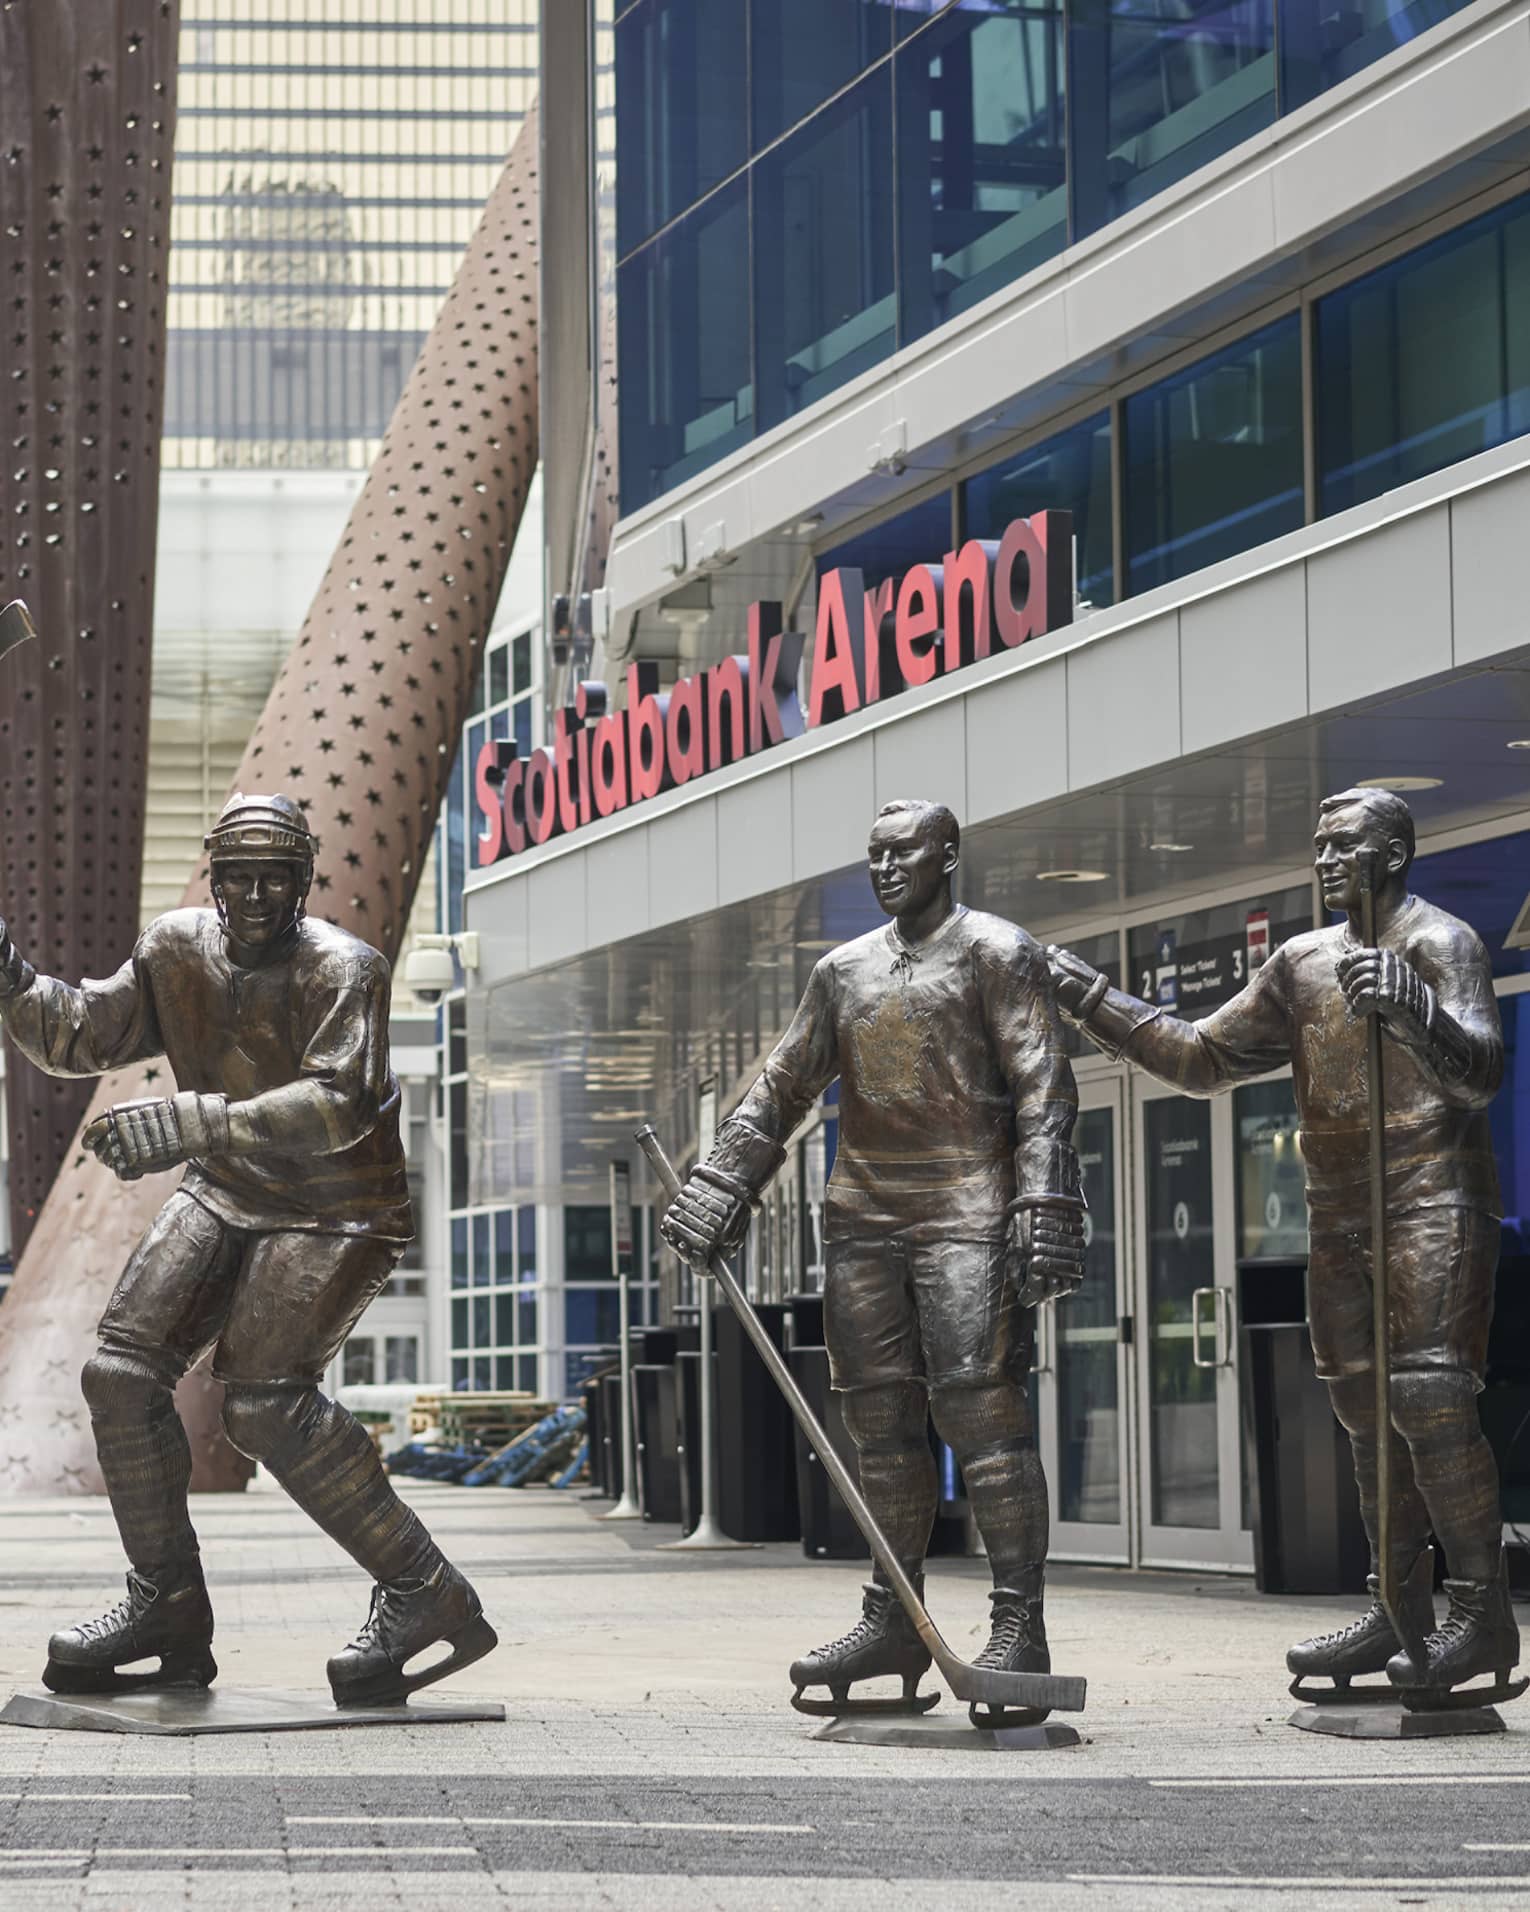 A couple walks down a sidewalk next to three bronze hockey player statues